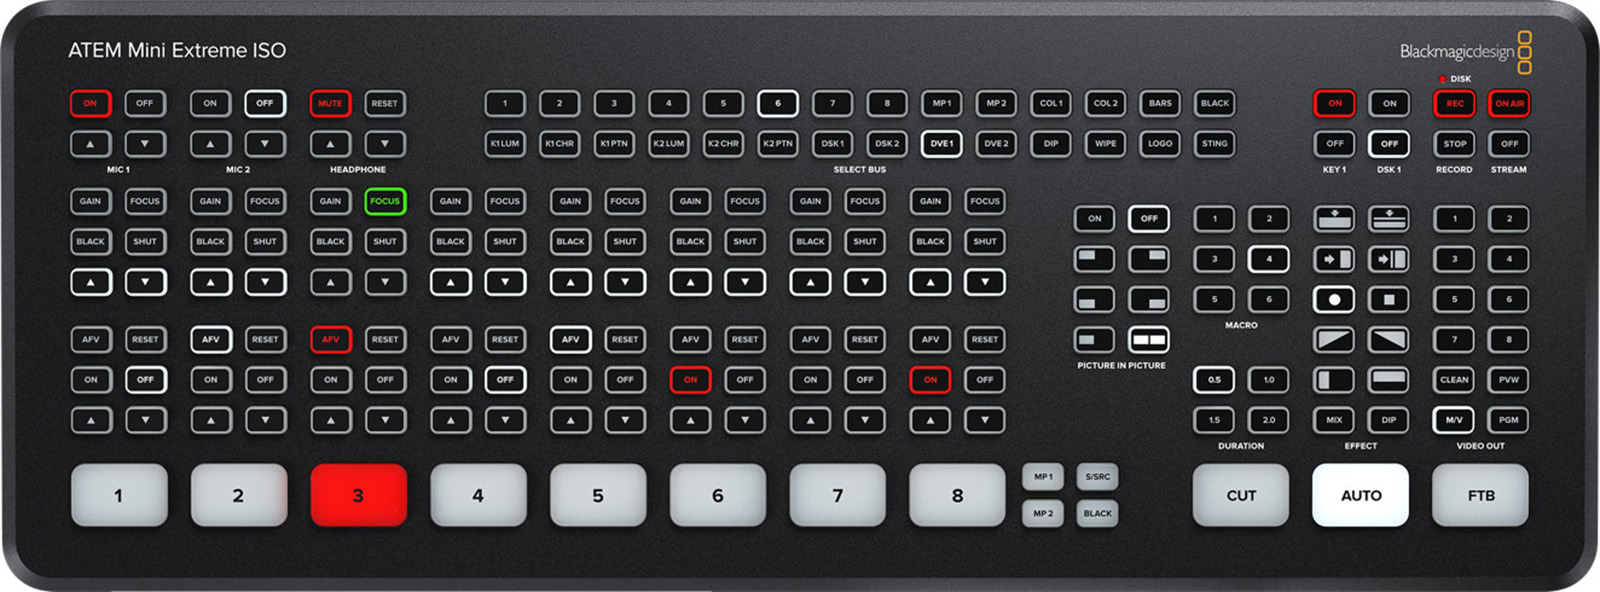 Blackmagic Design has a range of cost-effective switchers, like the ATEM Mini Extreme ISO. Image © Blackmagic Design